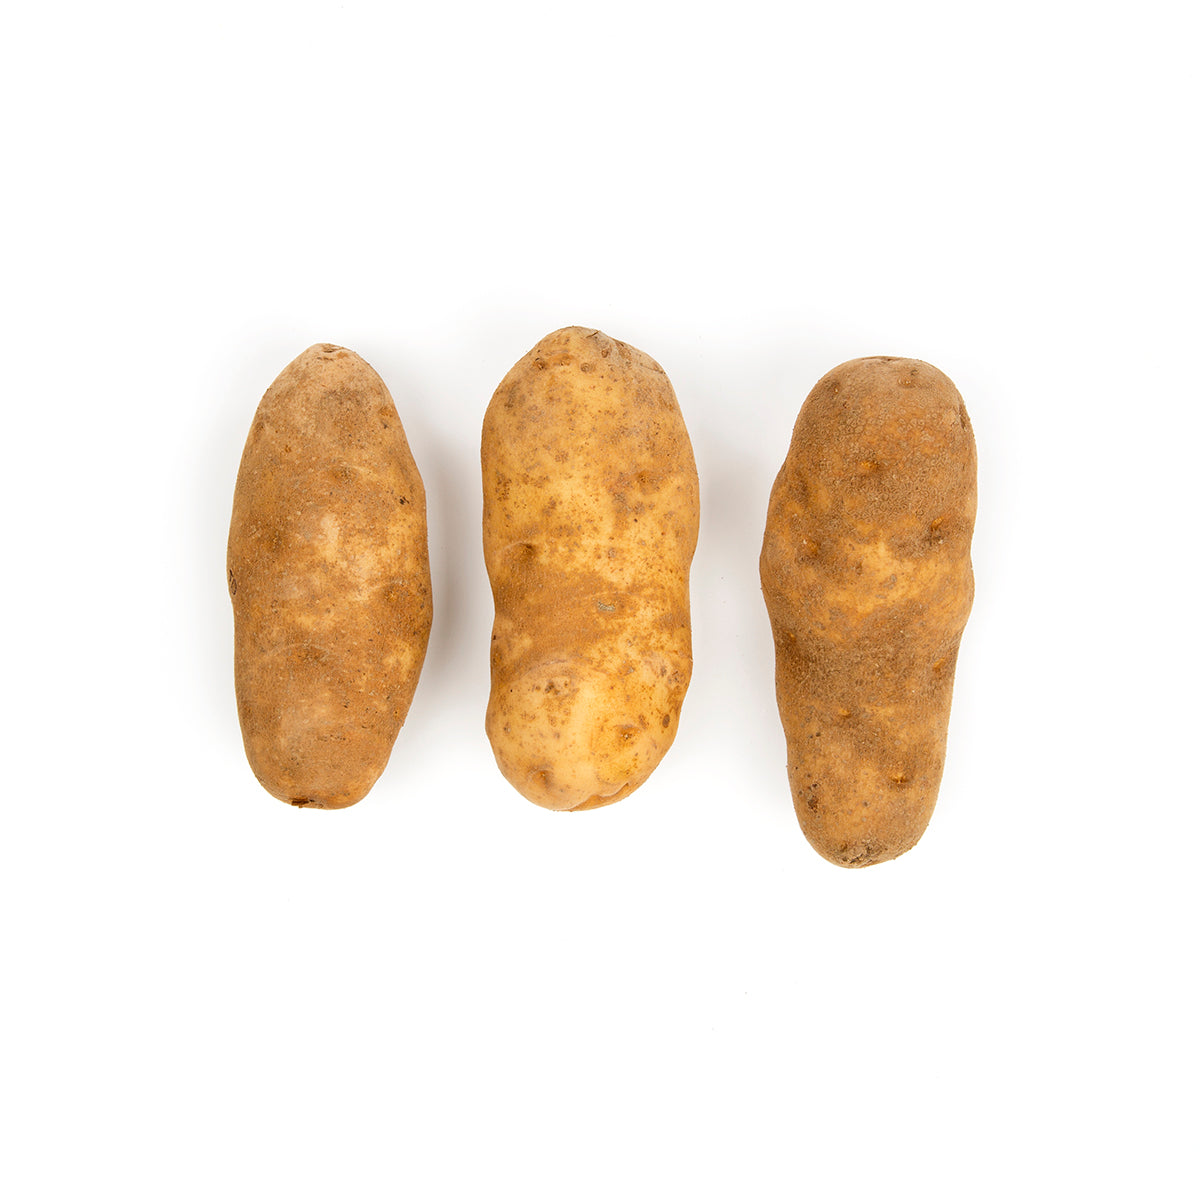 Green Thumb Farms White Envol Frying Potatoes 50 lb Bag